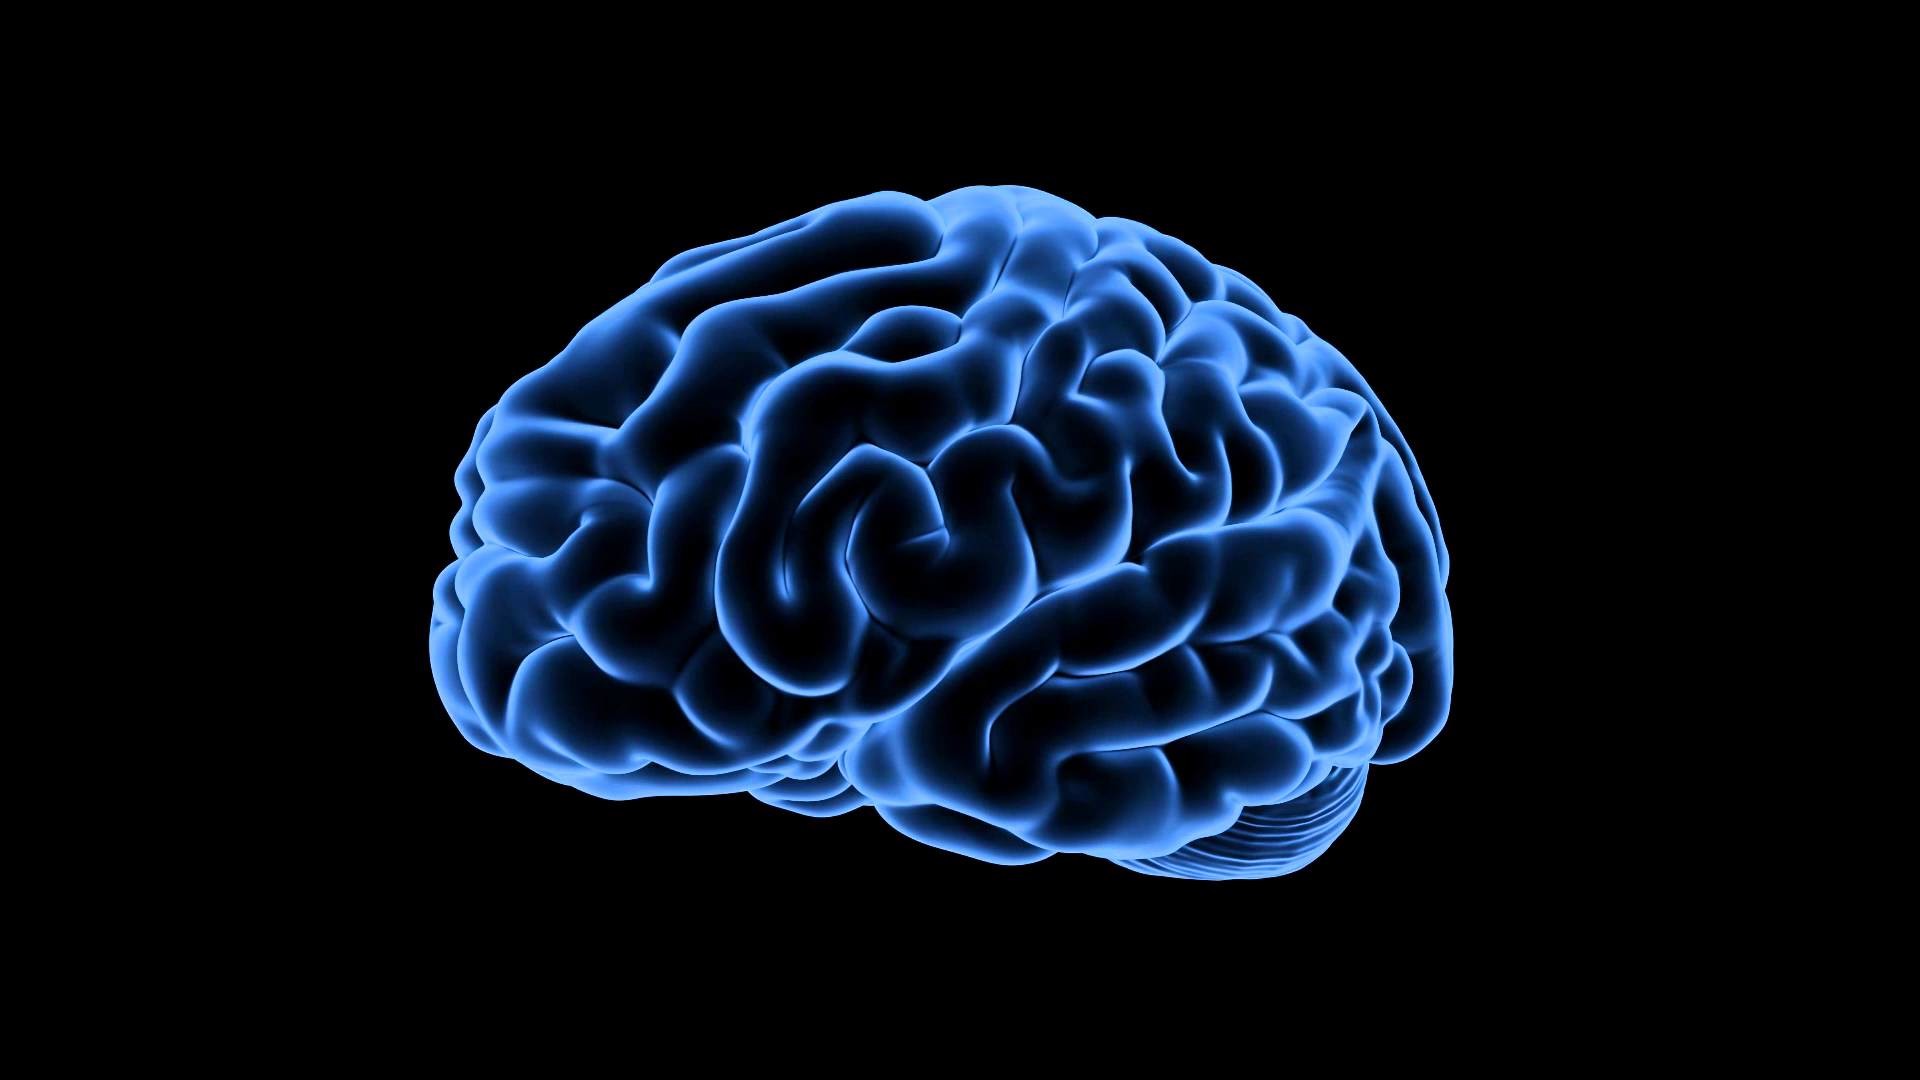 1920x1080 Royalty Free Medical Human Brain HD Footage - Brain ( Blue)360 Degree View  - YouTube